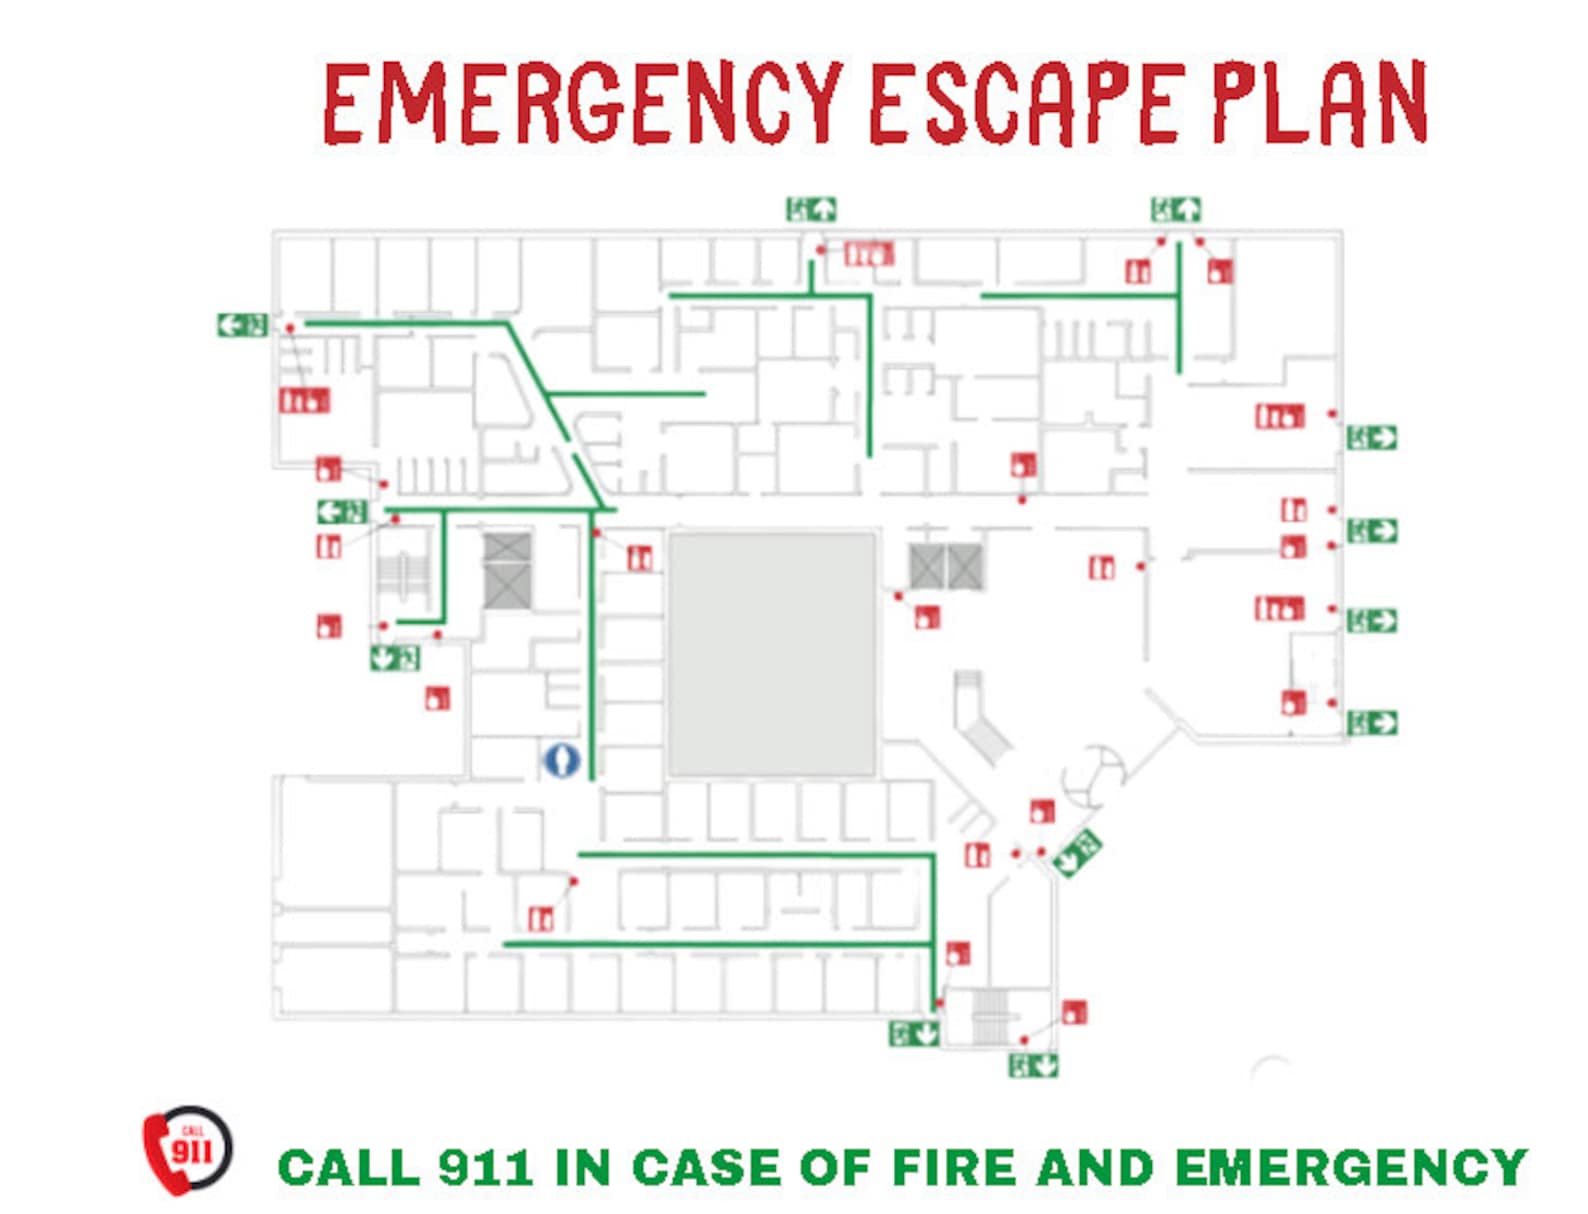 Fire Exit Plan,emergency Evacuation Plan, Evacuation Map, Escape Plan ...